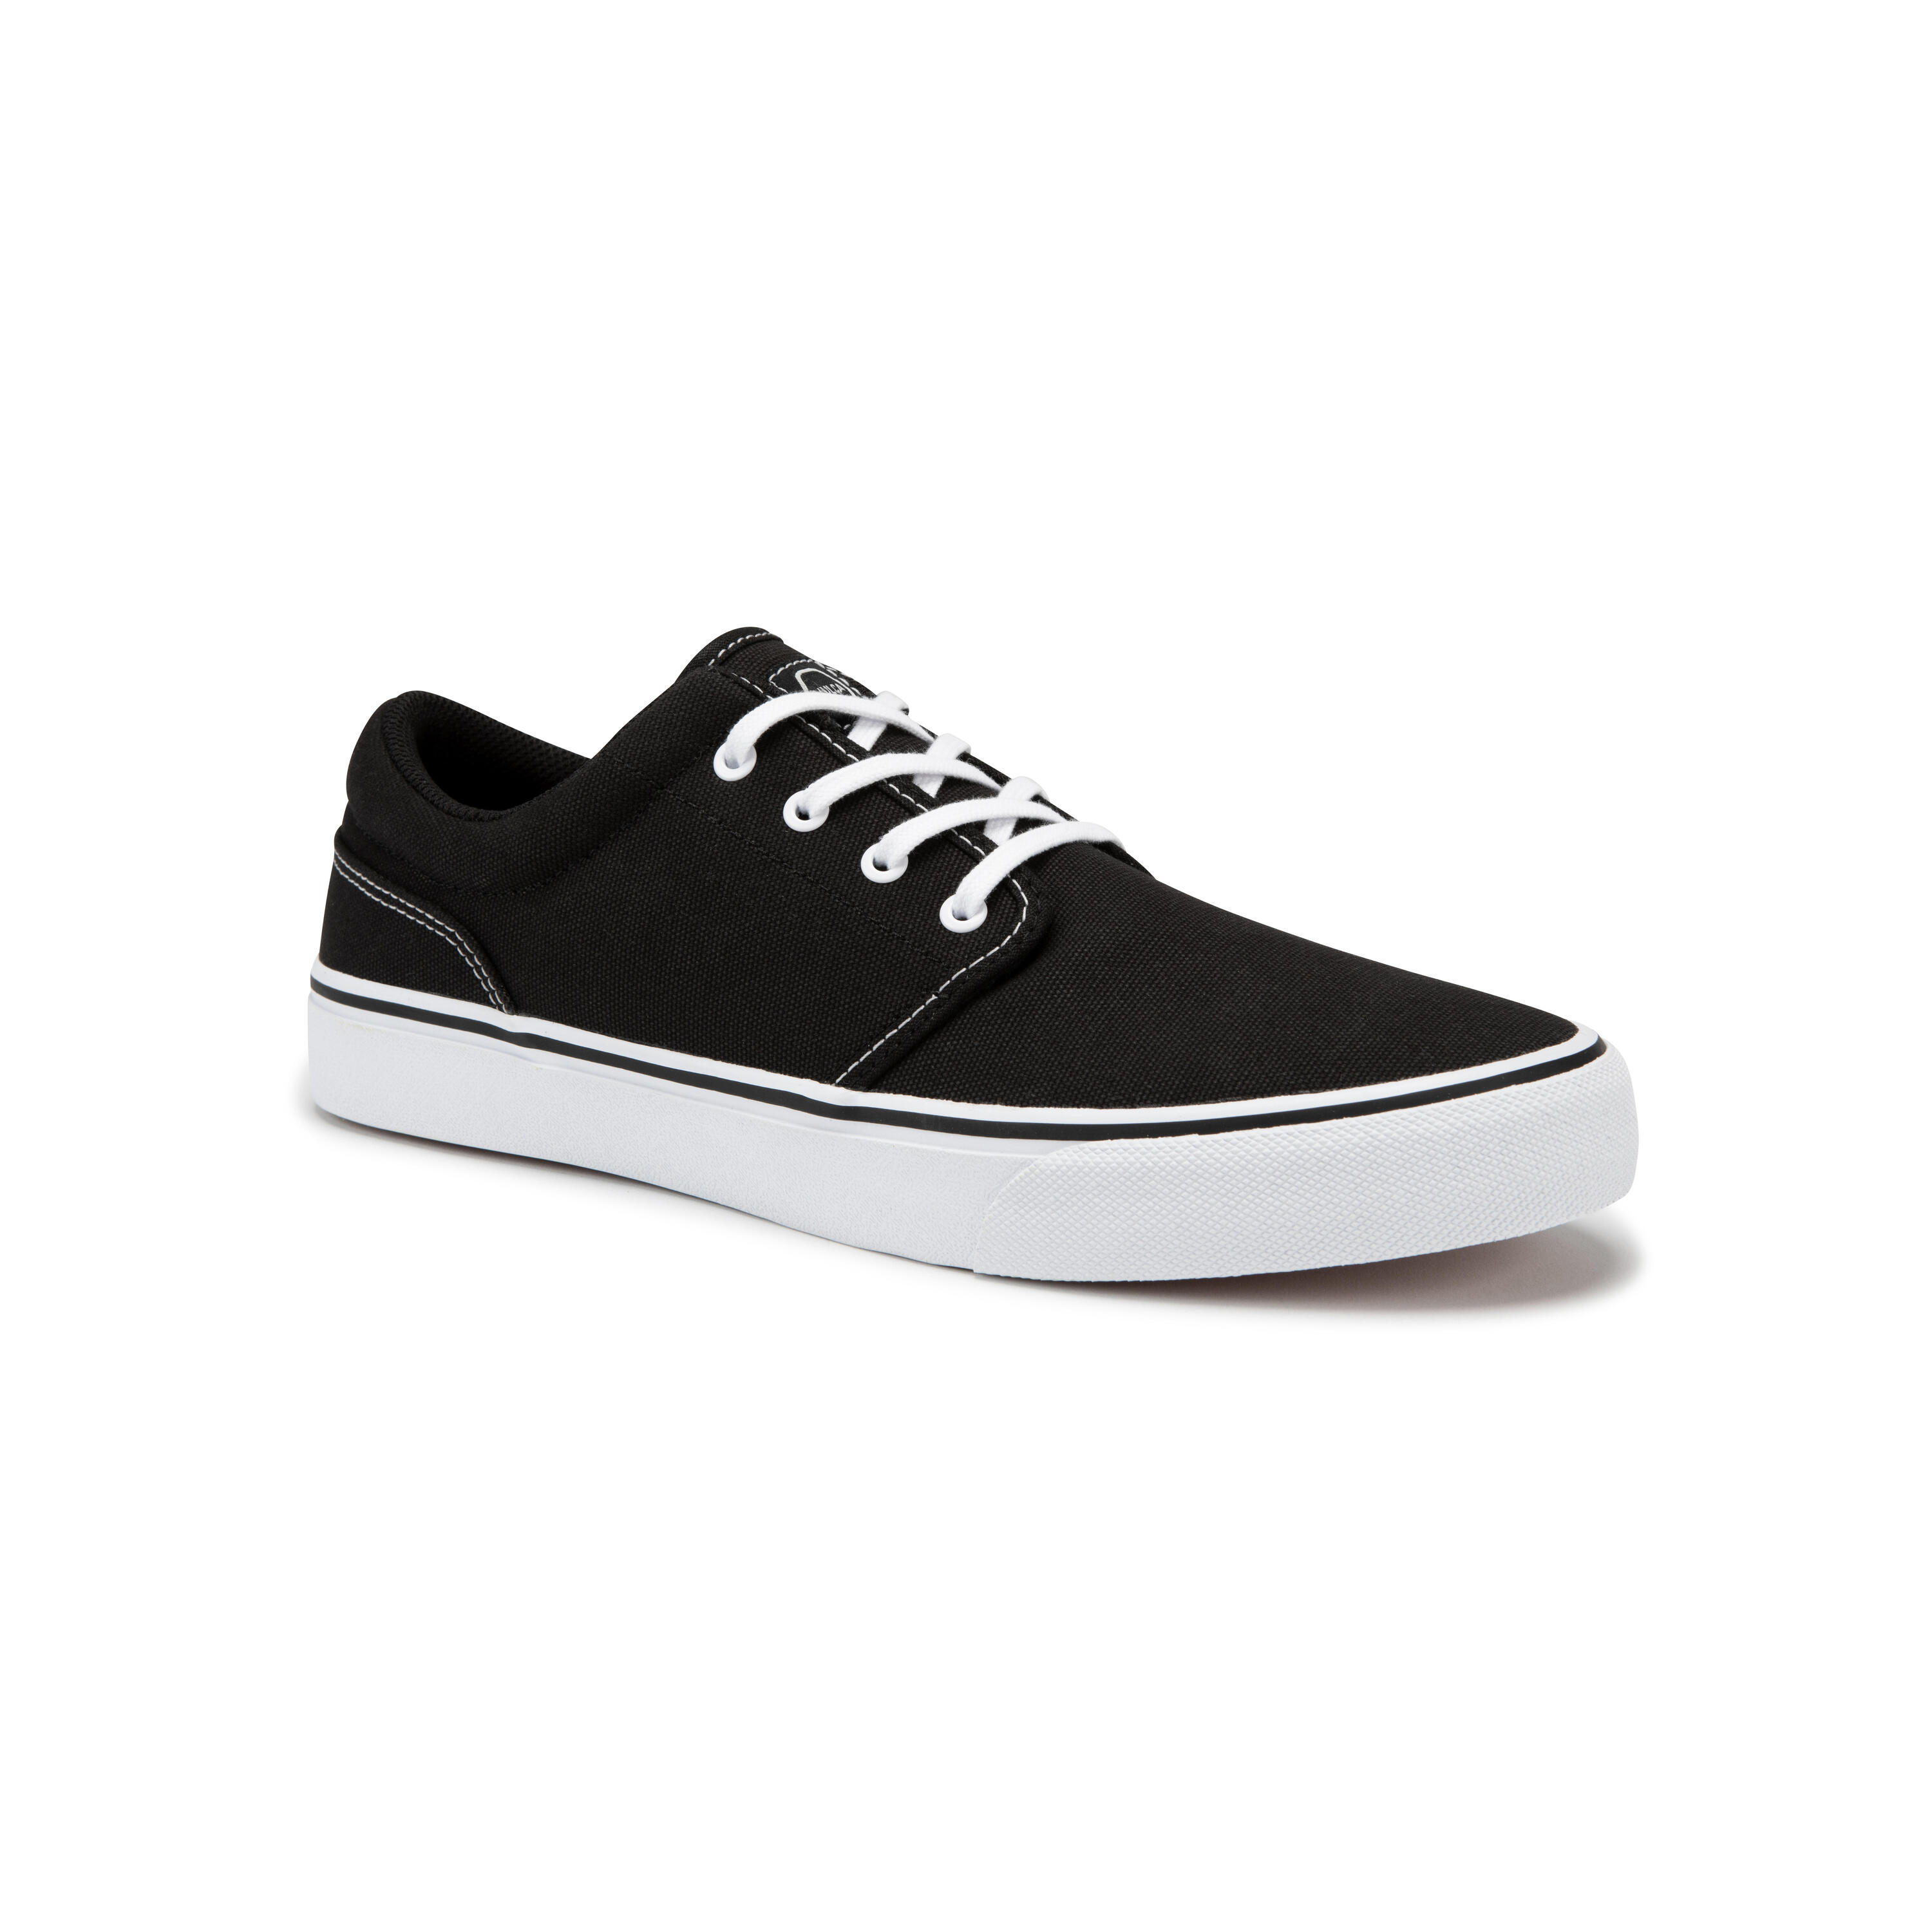 OXELO Adult Low-Top Skateboarding Longboarding Shoes Vulca 100 - Black/White